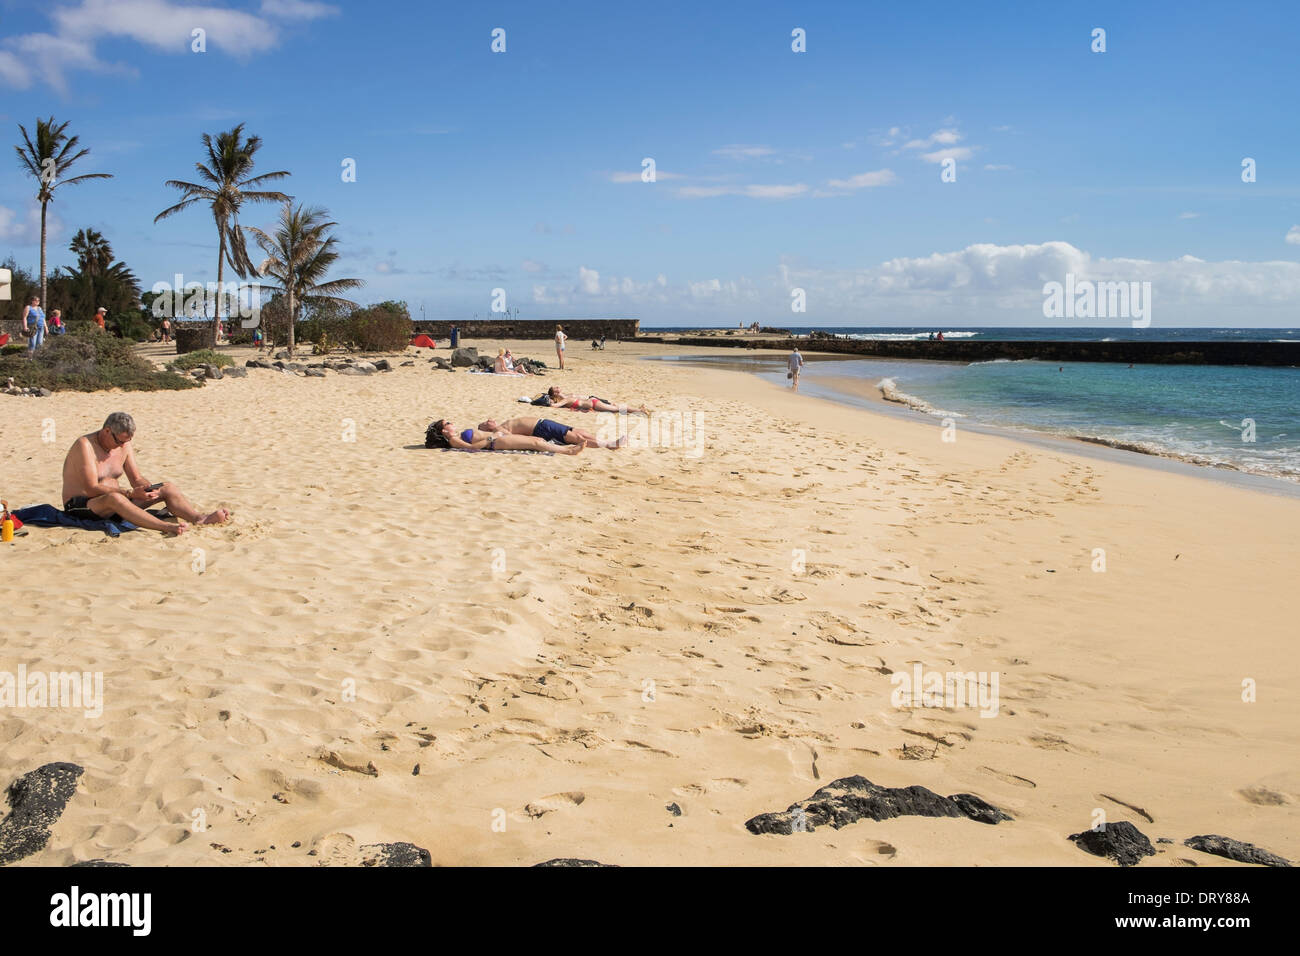 Poeple sunbathing on the sandy Playa de las Cucharas beach in Costa Teguise, Lanzarote, Canary Islands, Spain, Europe. Stock Photo